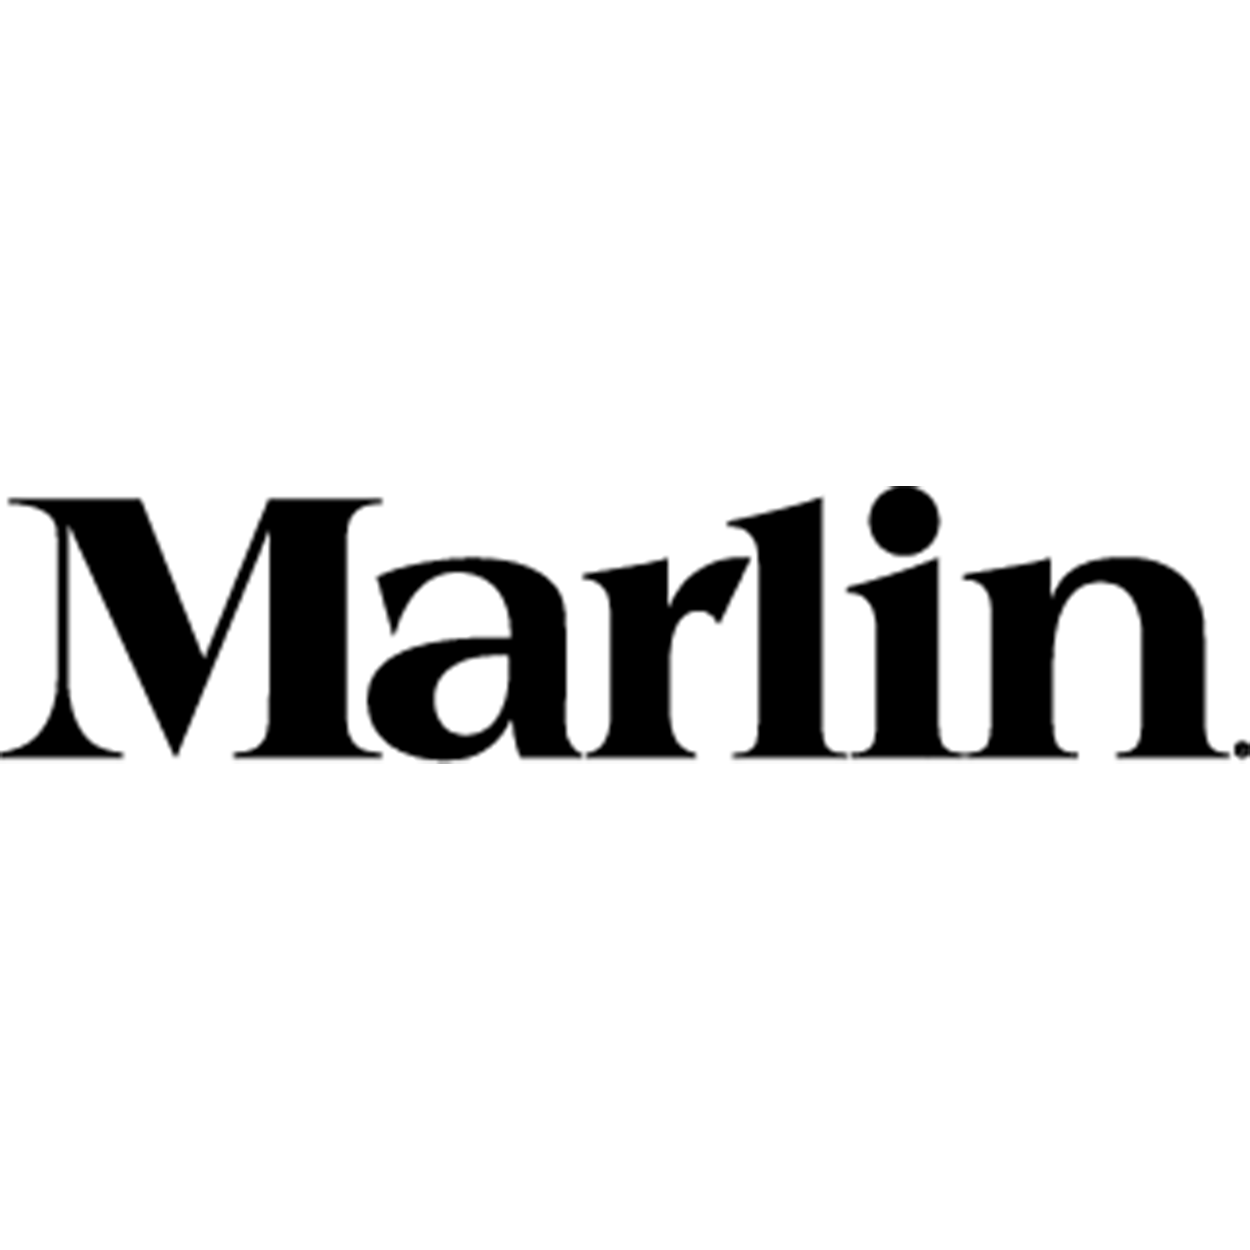 Marlin magazine logo